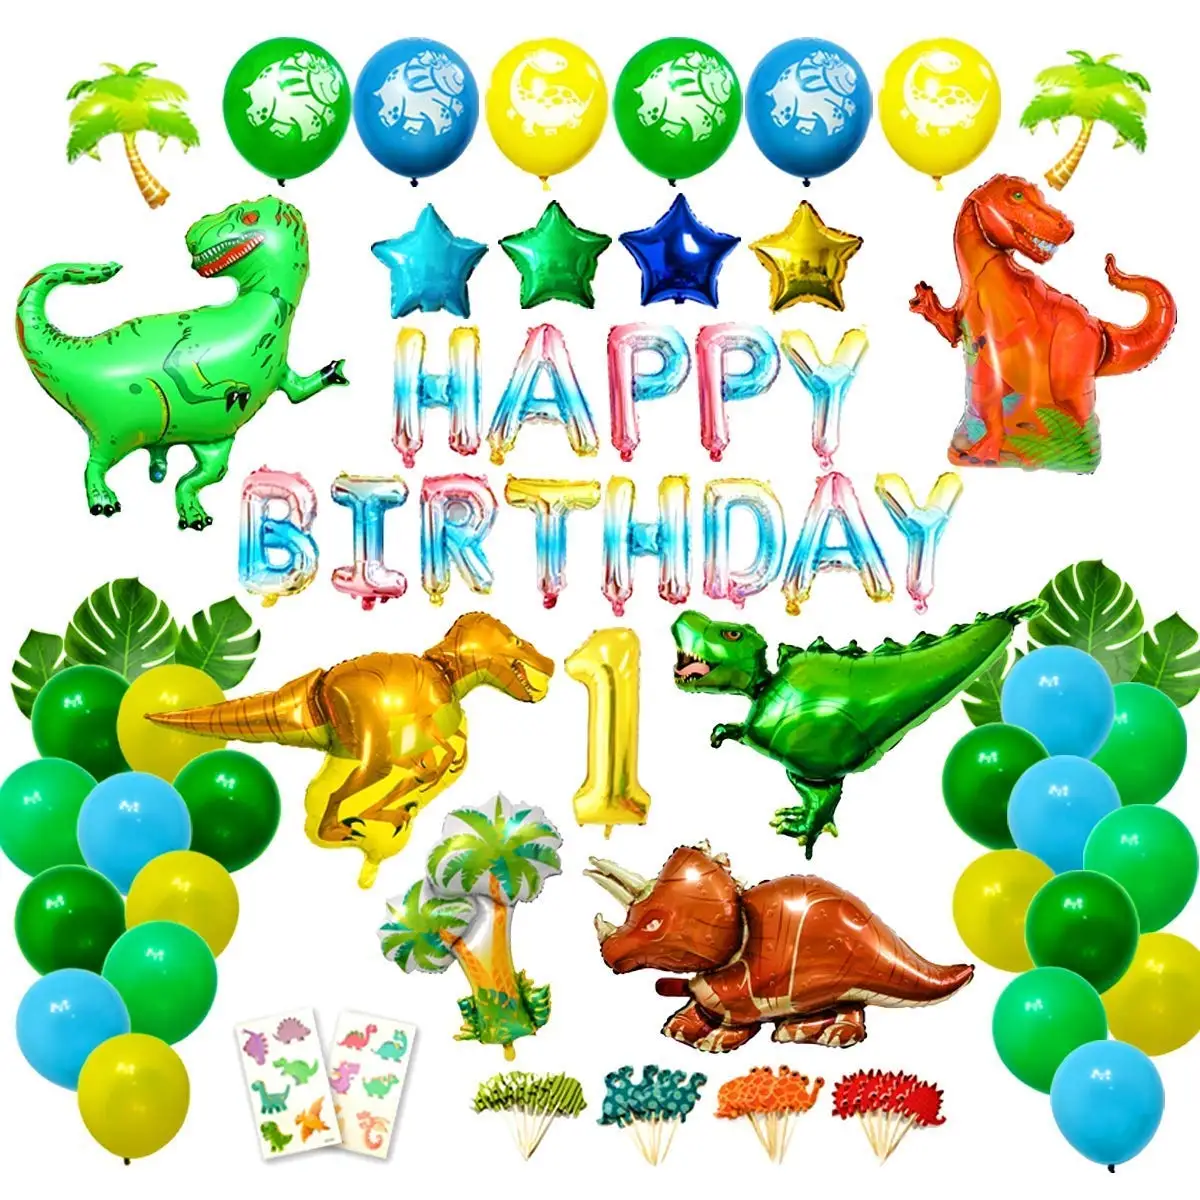 dinosaurs foil balloons giant size birthday party set decor dinosaur US Seller 0 